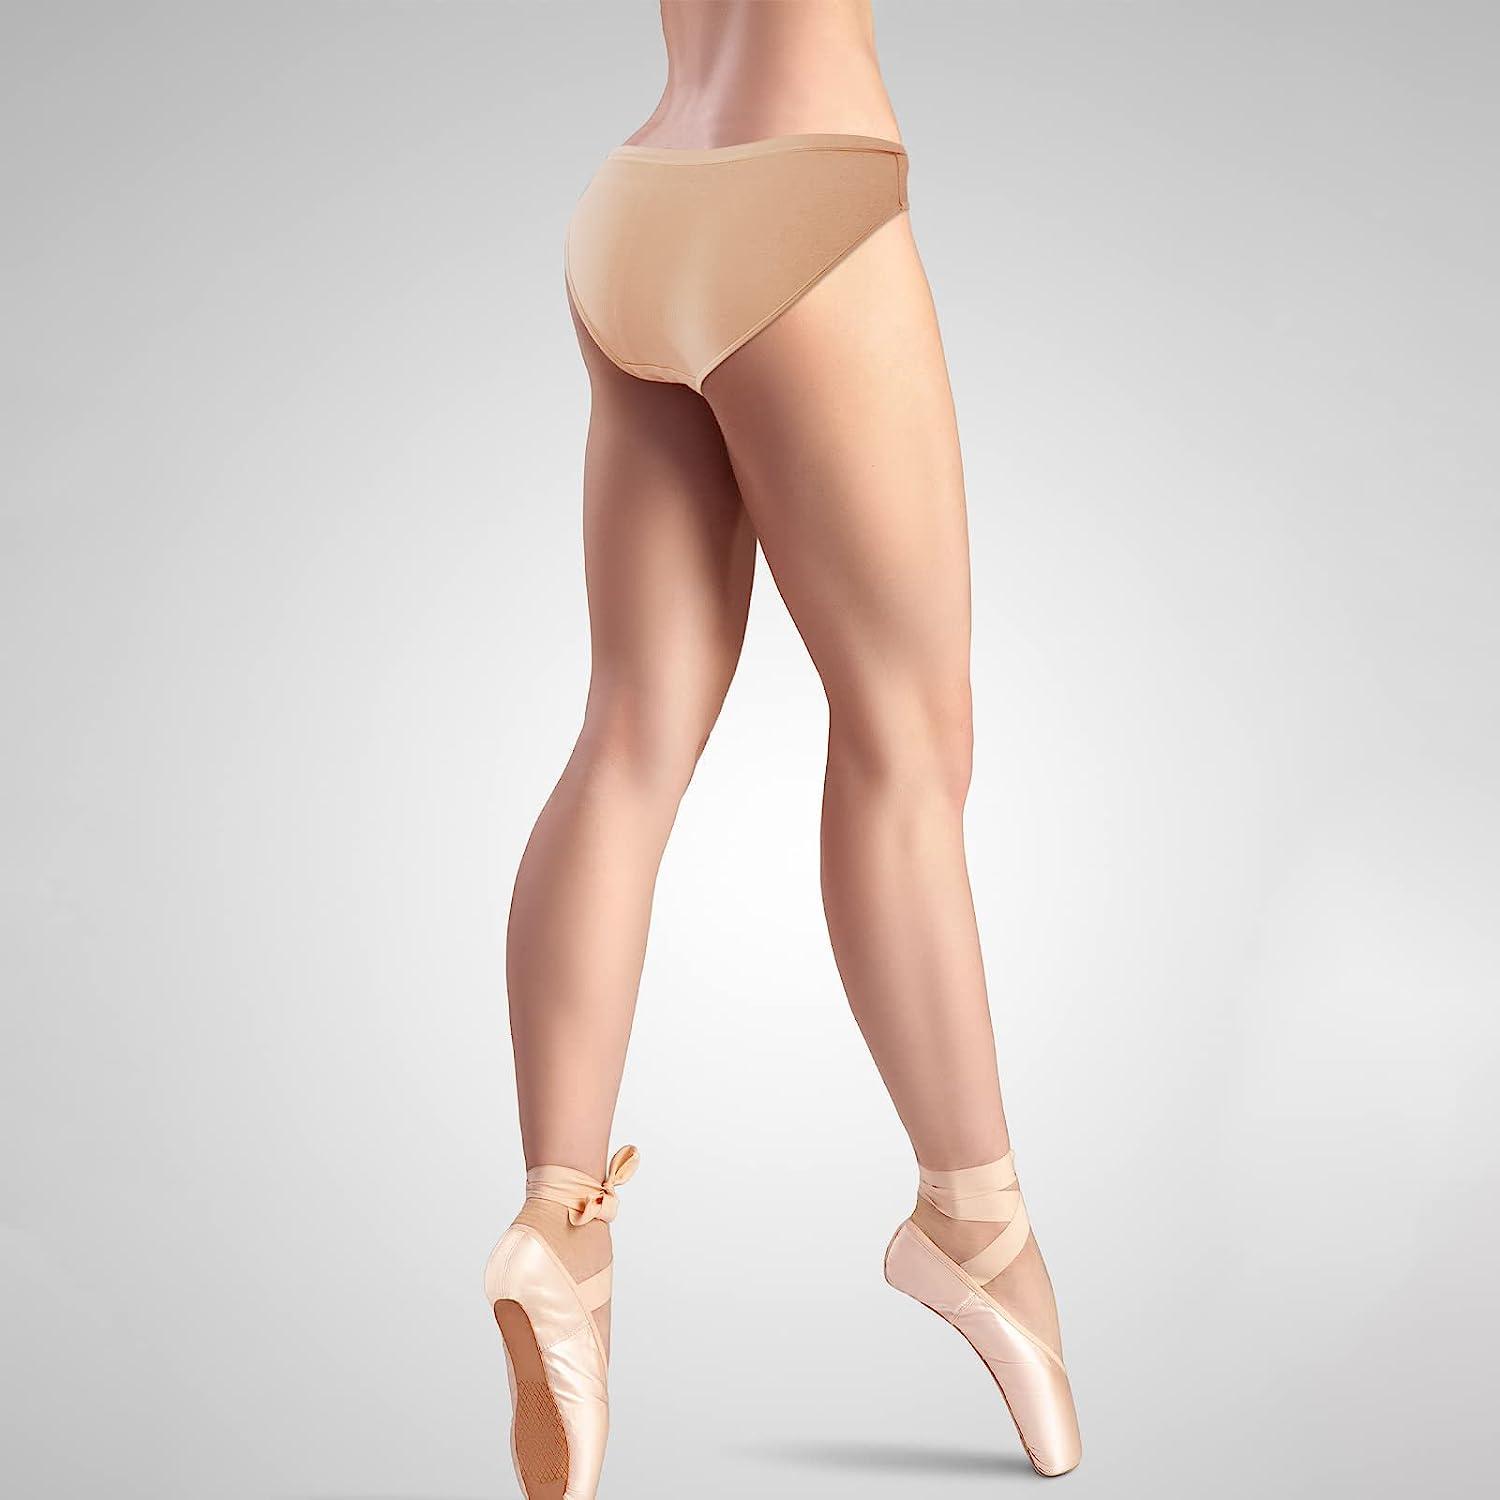 Girls Invisible Performance High Cut Line Dance Ballet Briefs Panties Undies  Gymnastics Underpants Dancer Beige Bottom